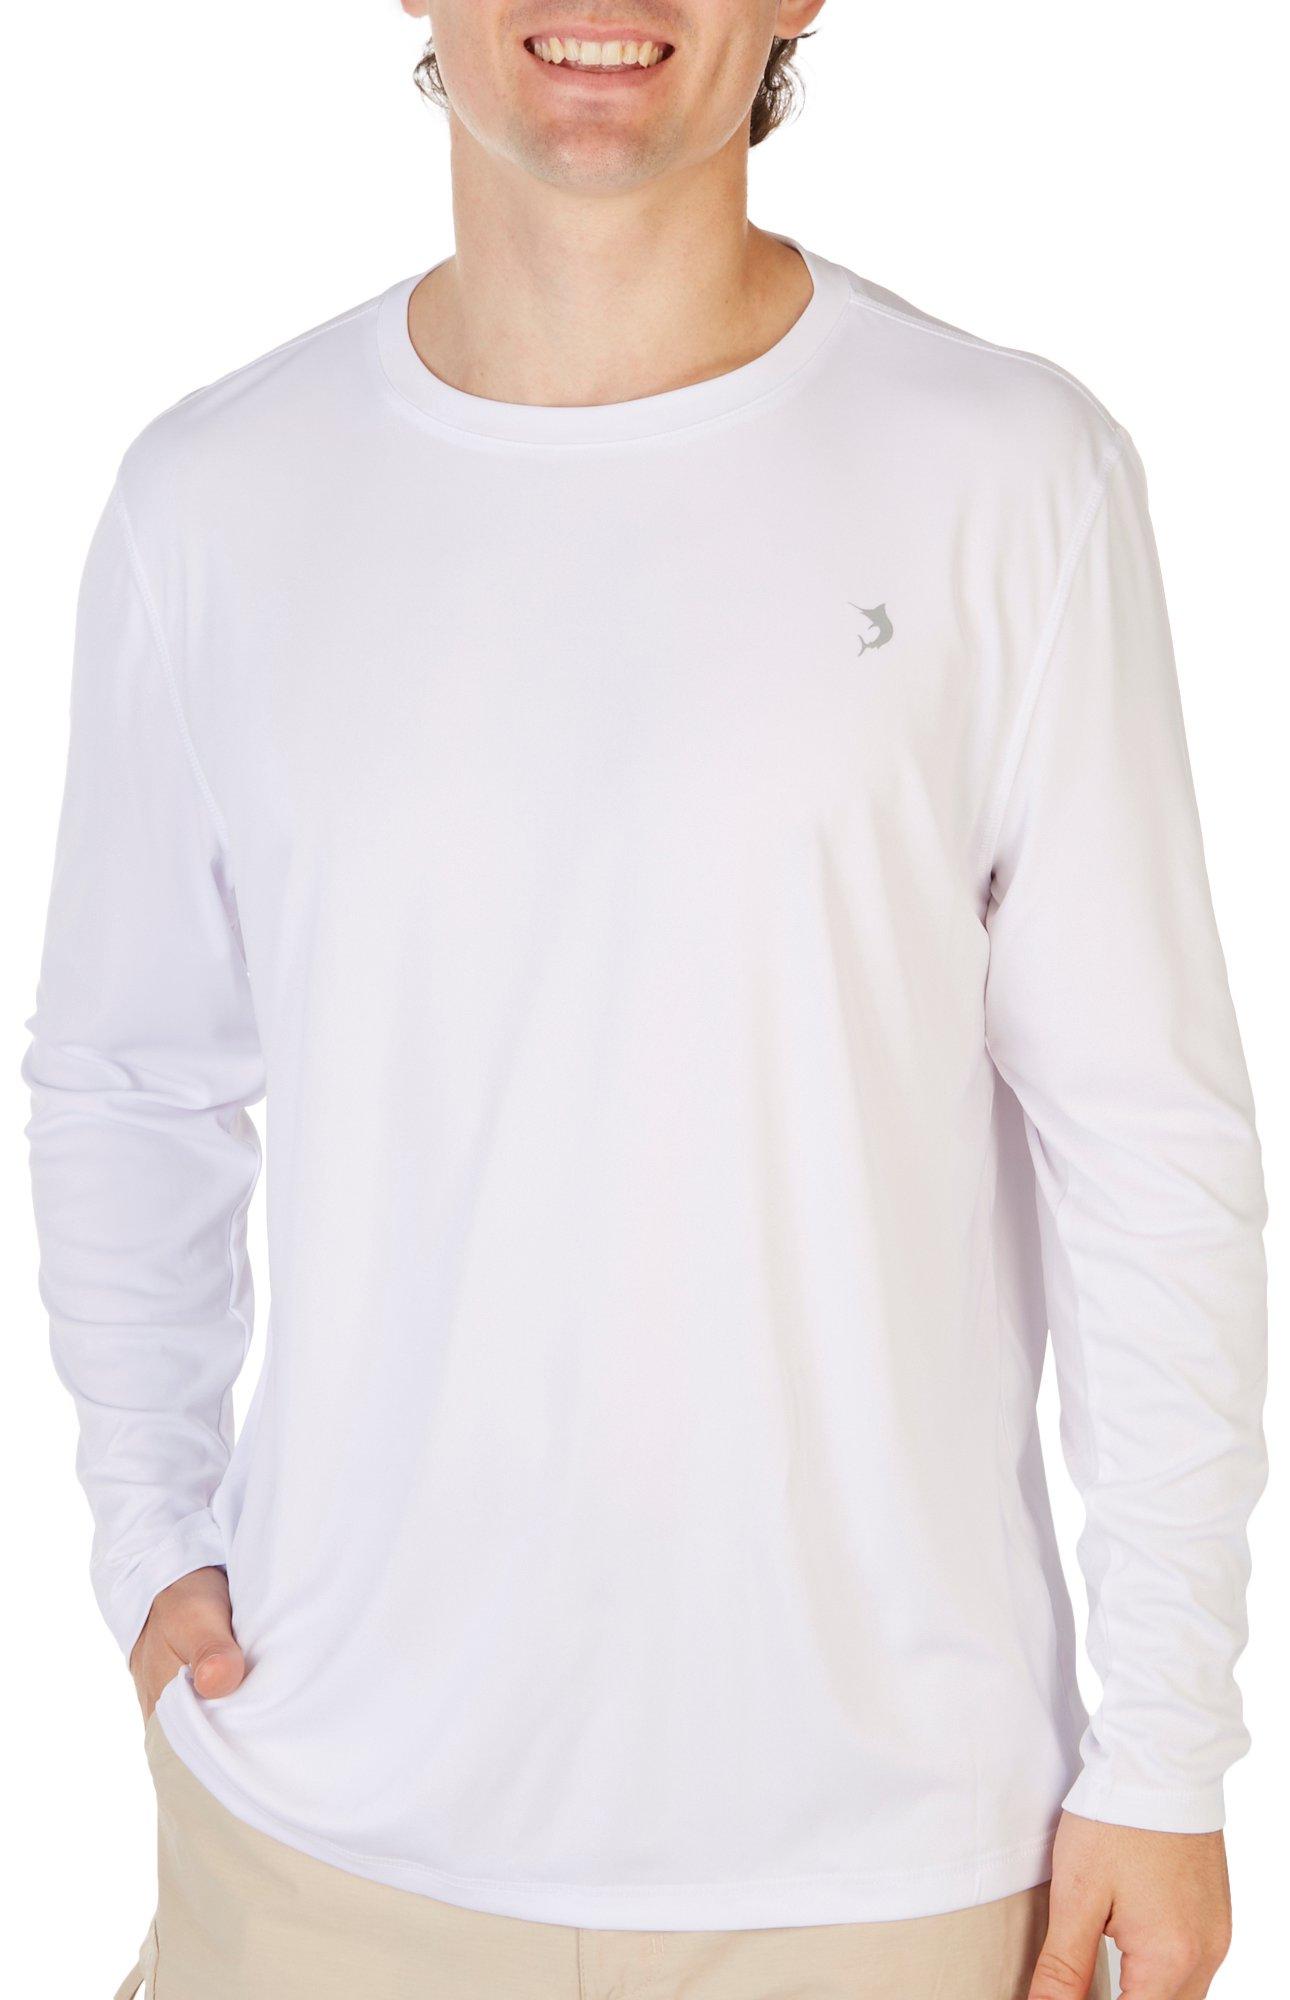 Reel Legends Mens Reel-Tec Solid Long Sleeve Shirt - White - Large